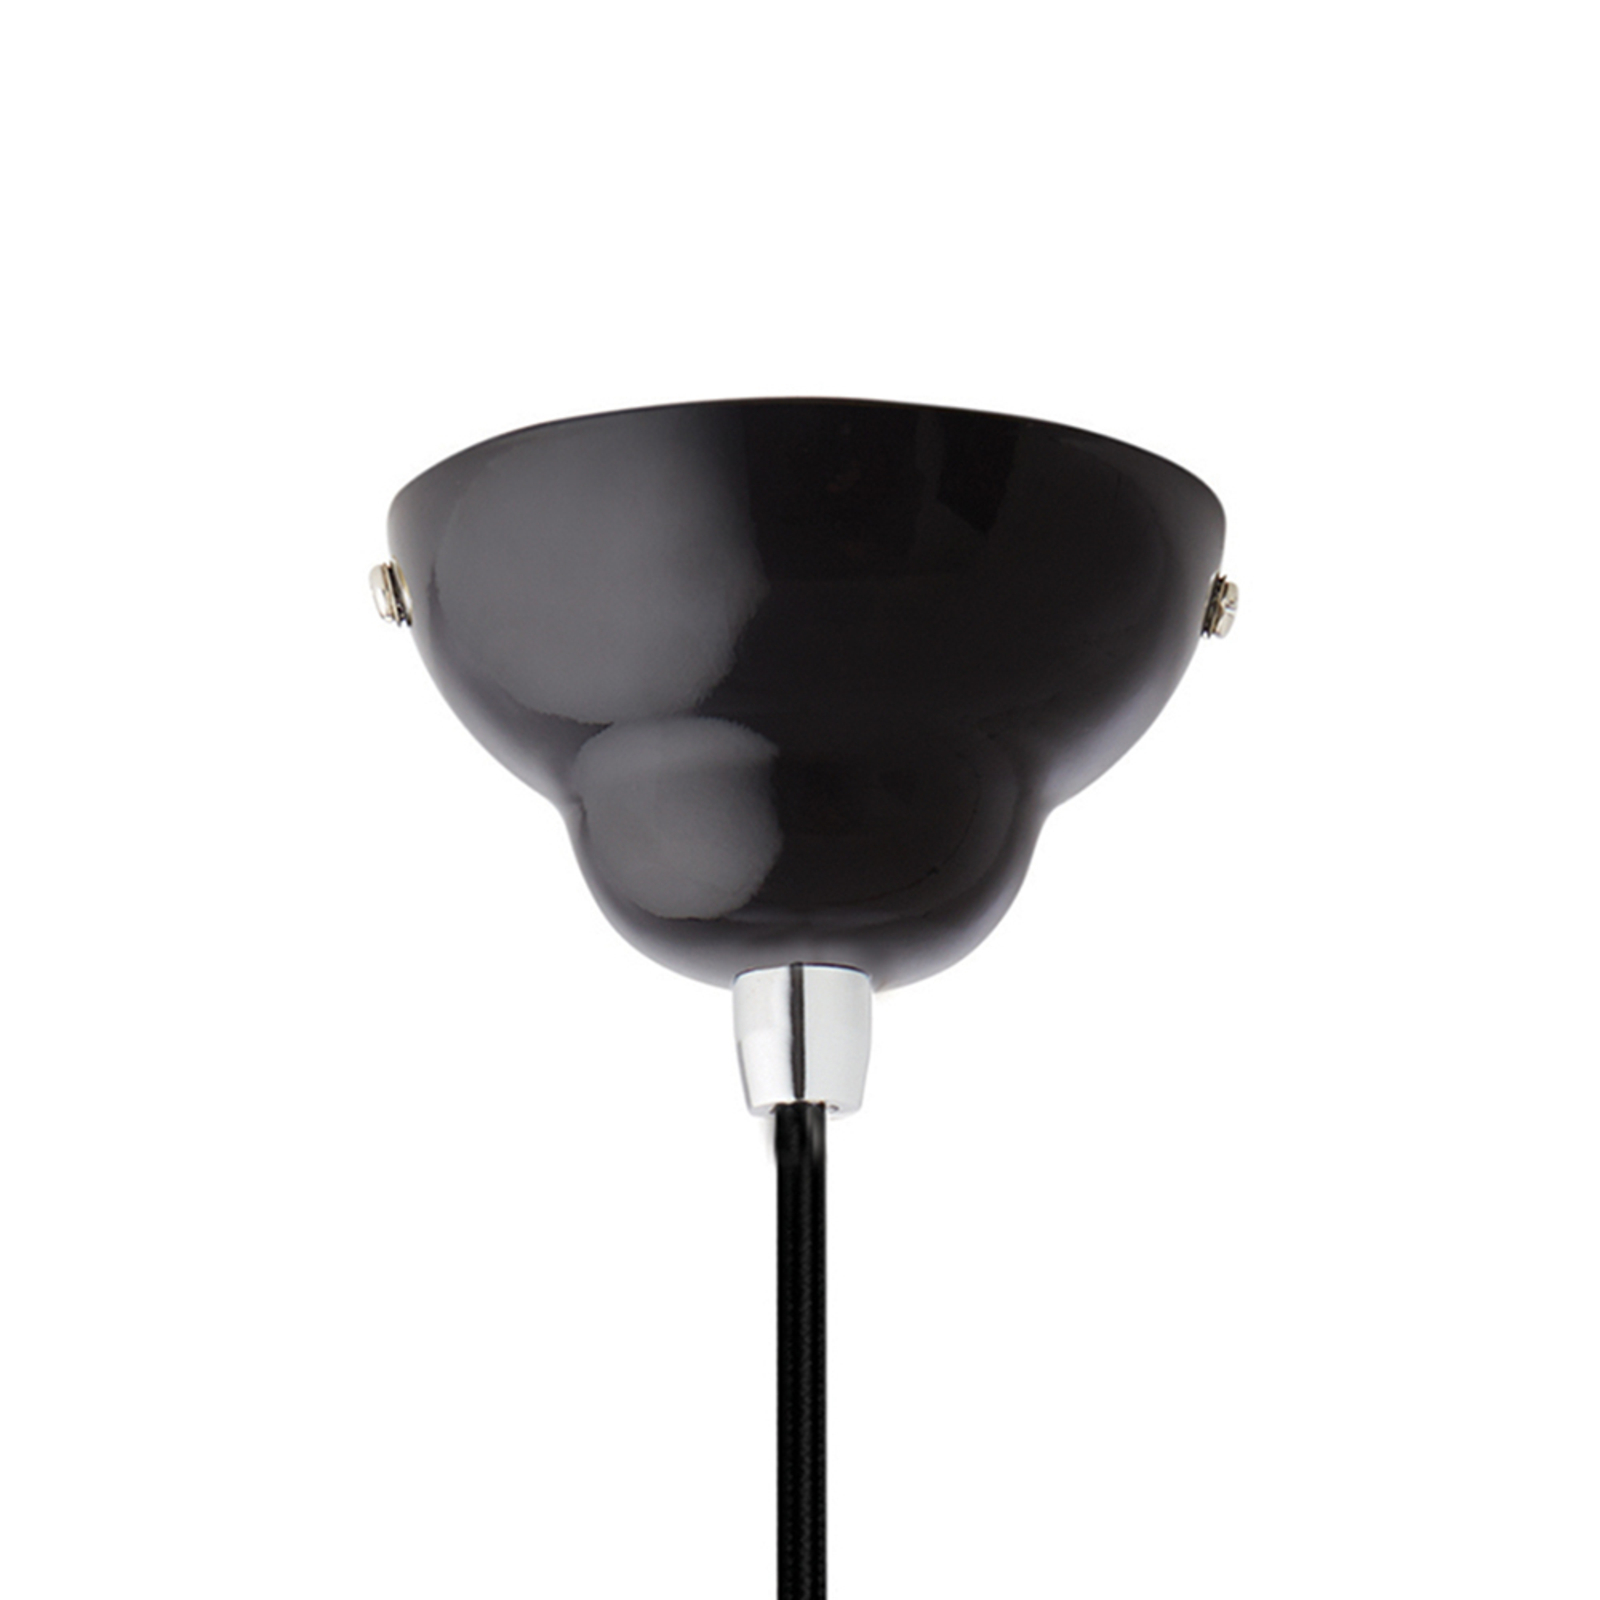 Anglepoise Original 1227 Maxi pendant lamp black